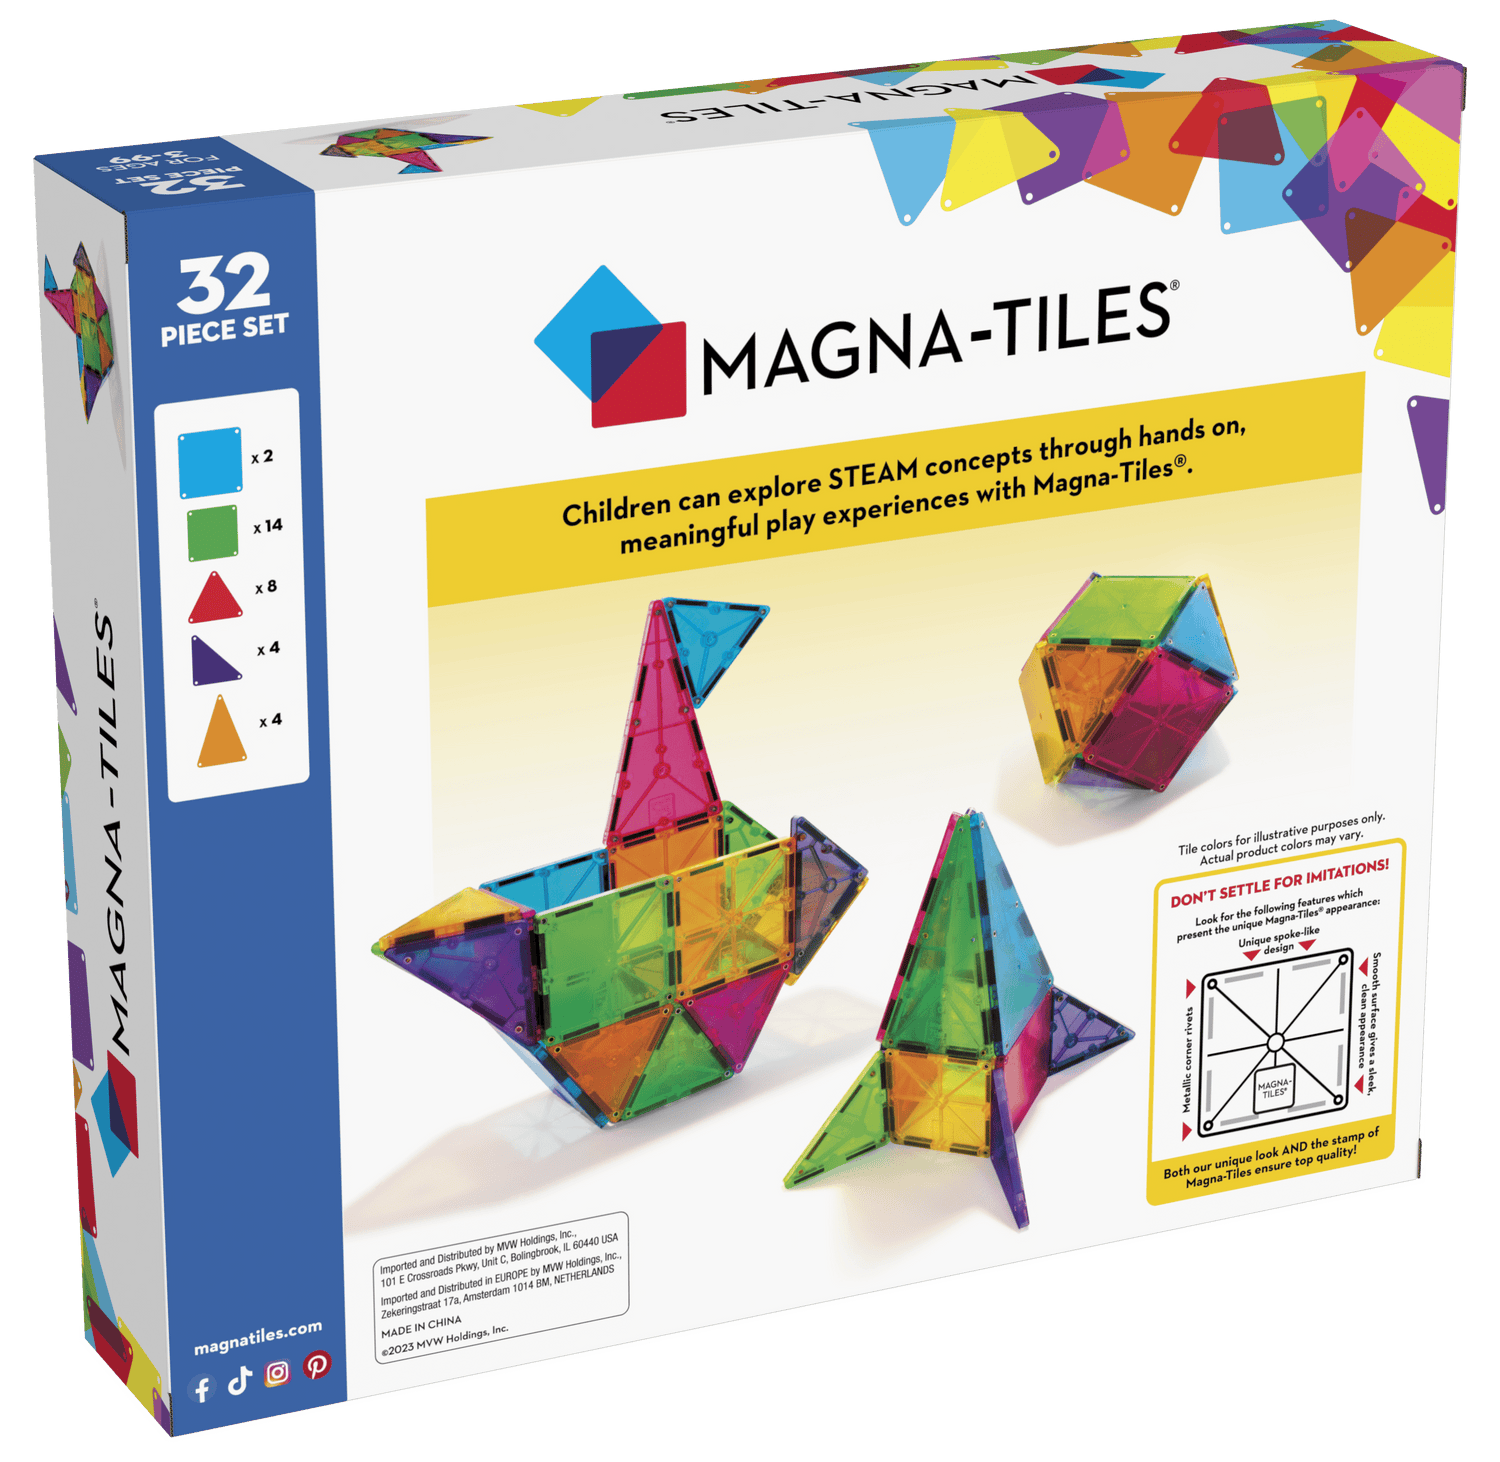 MAGNA-TILES | CLASSIC - 32 PIECE SET by MAGNA-TILES - The Playful Collective